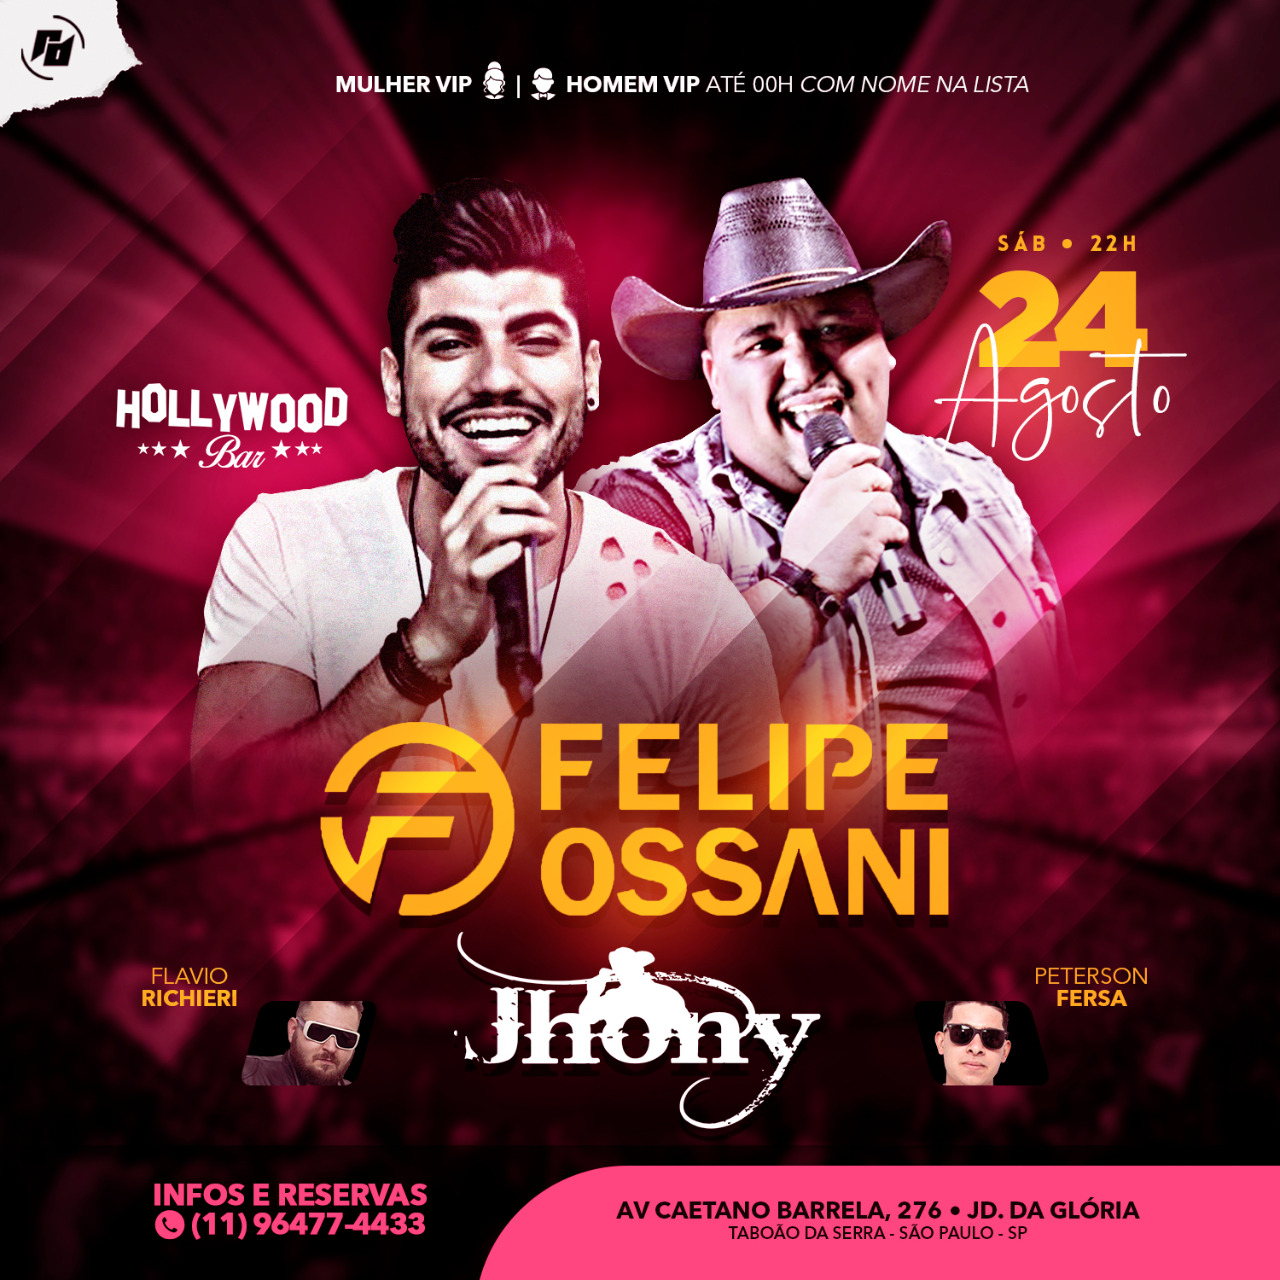 Hollywood Bar: Sábado 24/08 - Felipe Ossani e O jhony